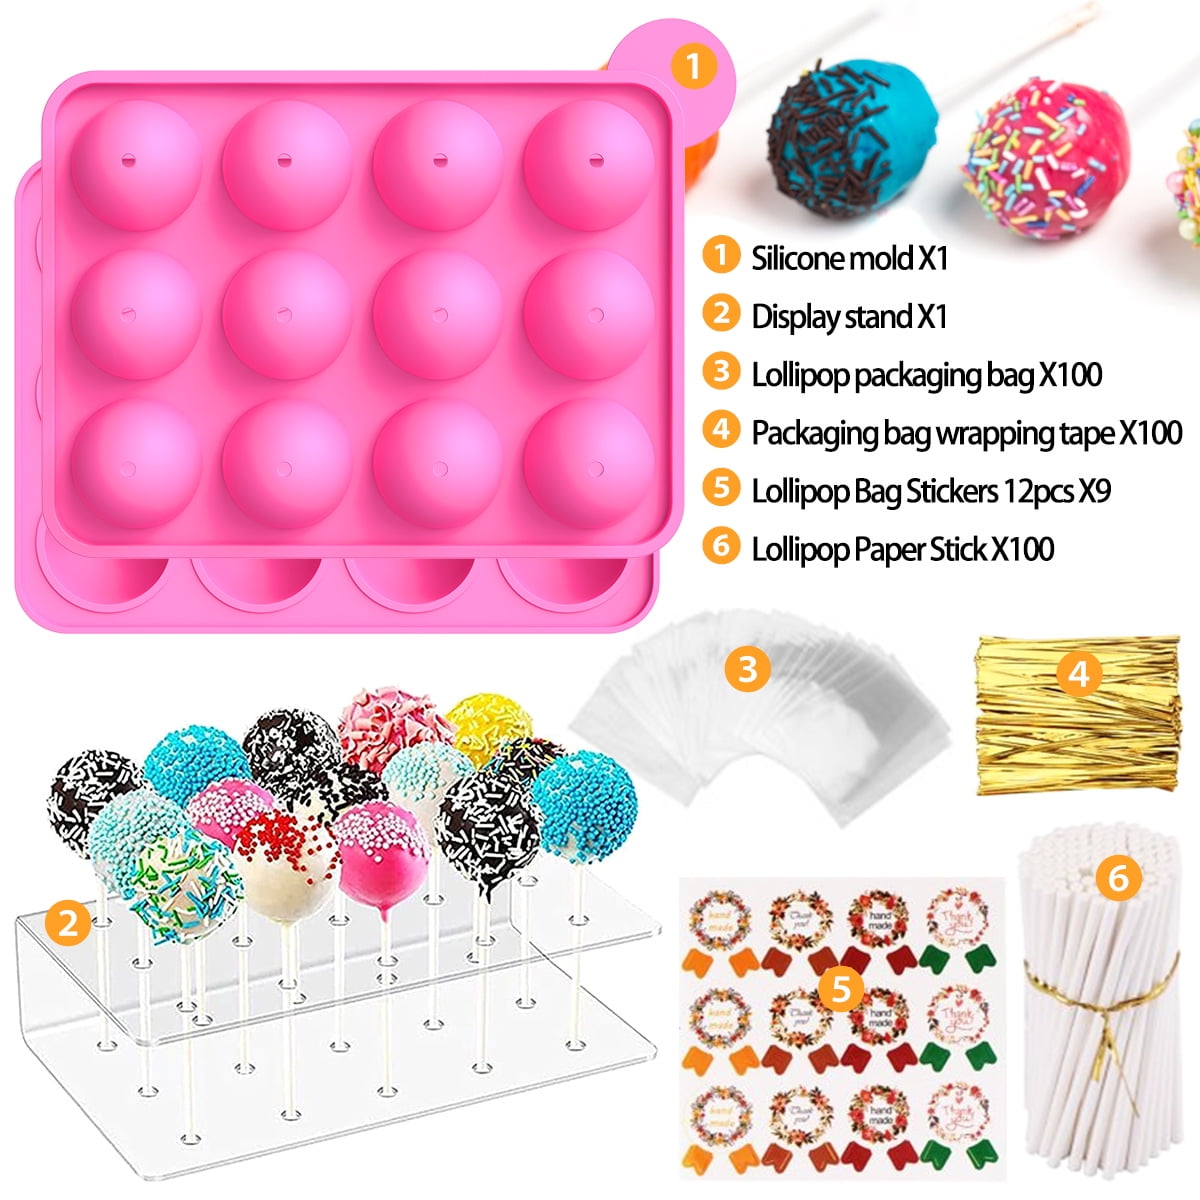 Hoedia silicone cake pop mold set, 24 cavity lollipop maker kit